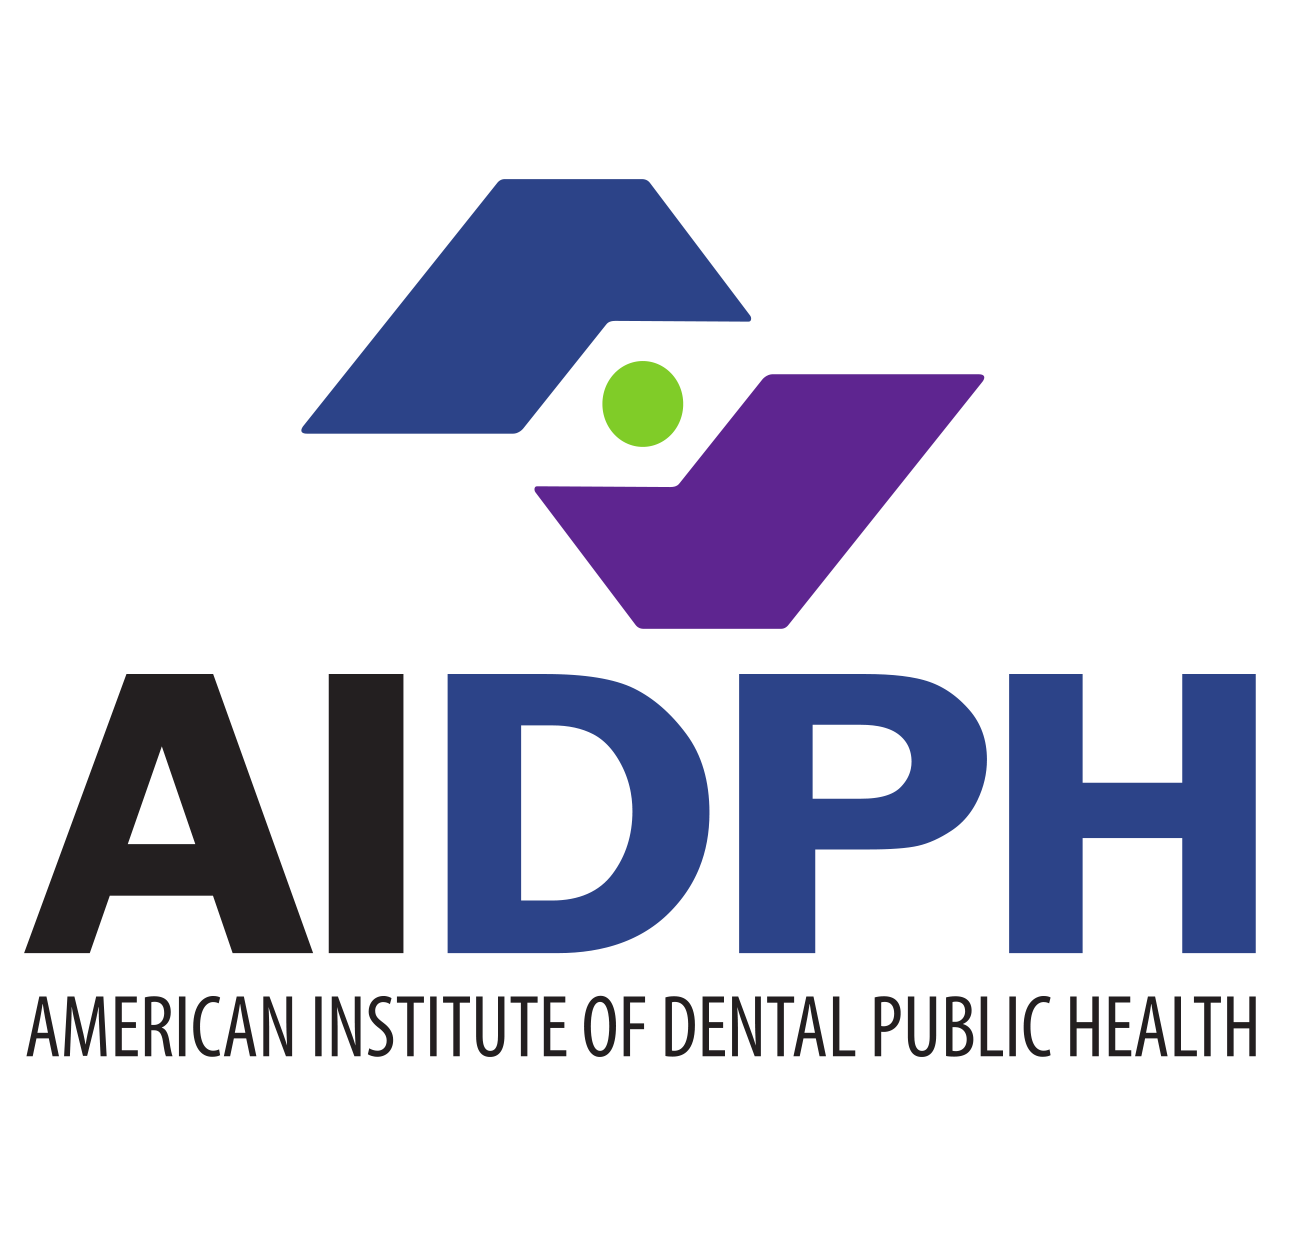 AIDPH American Institute of Dental Public Health